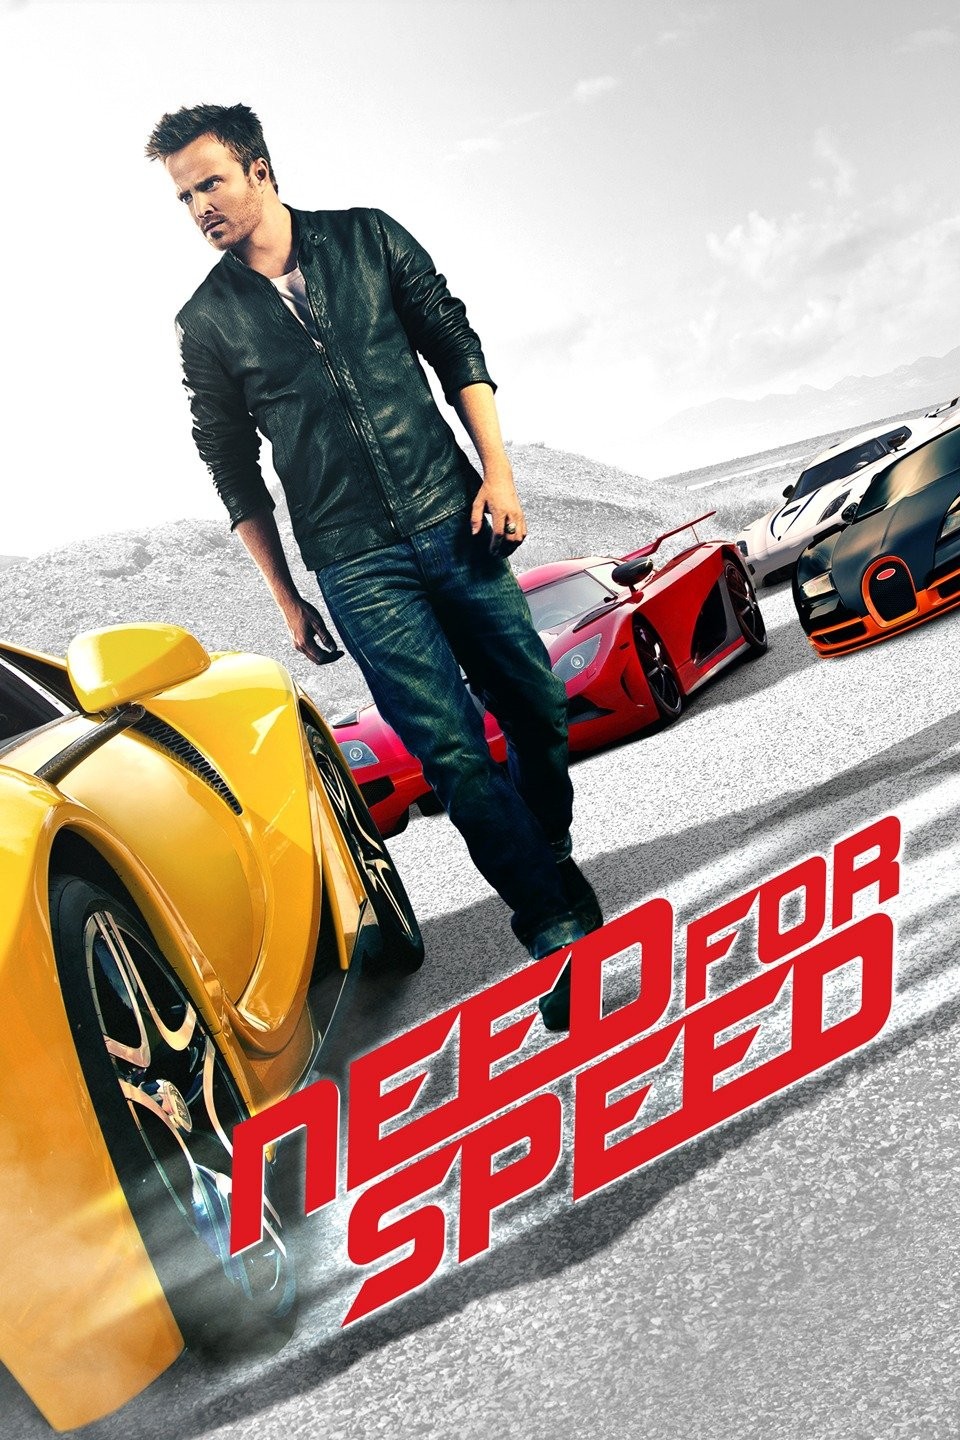 Need for Speed (2014) - Aaron Paul as Tobey Marshall - IMDb